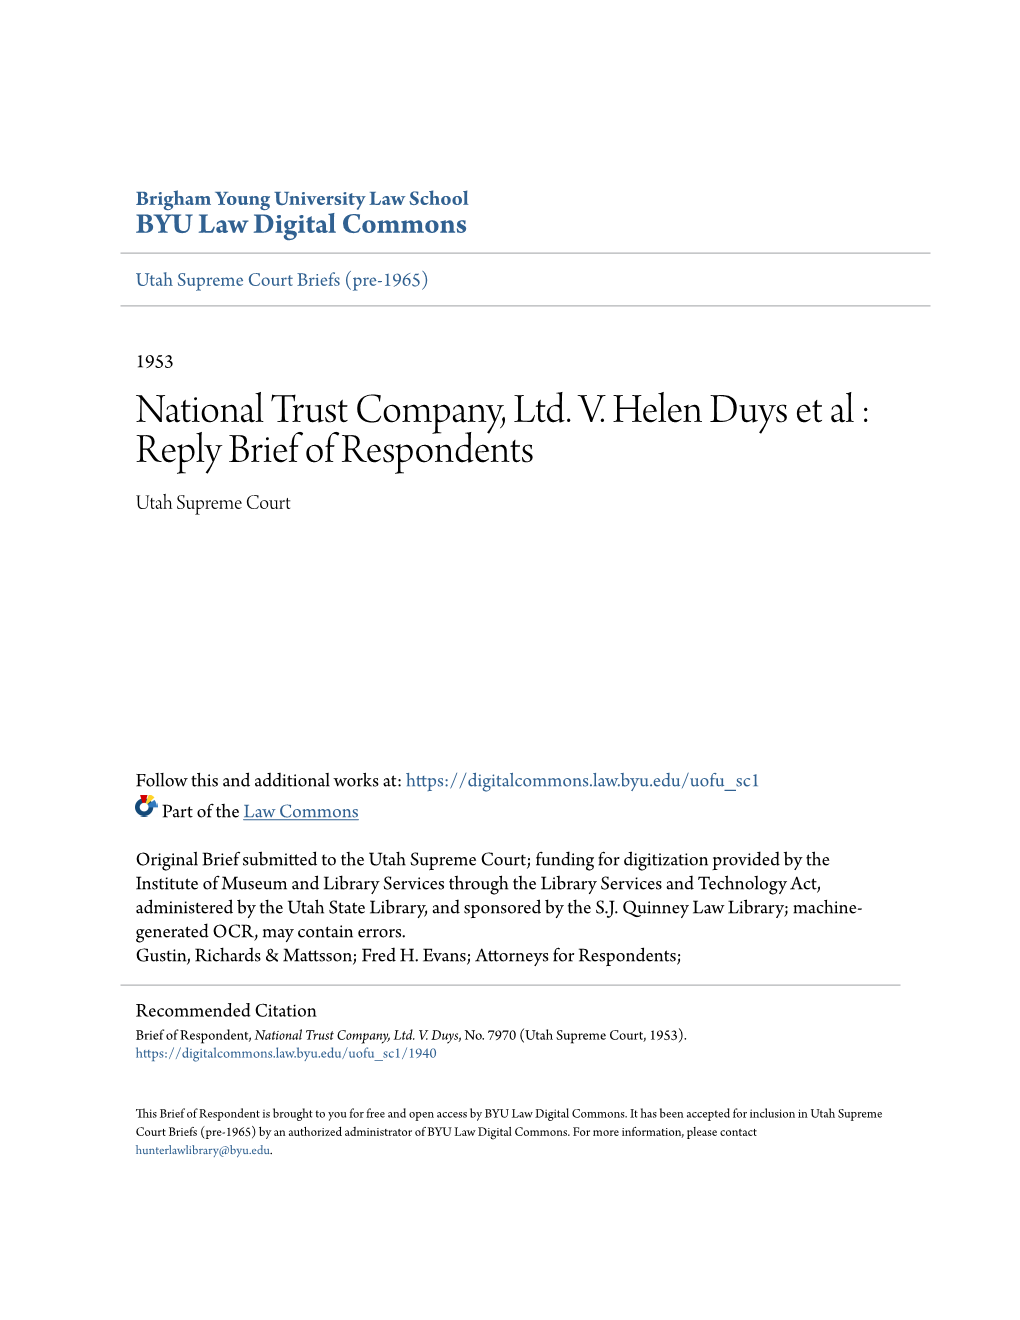 National Trust Company, Ltd. V. Helen Duys Et Al : Reply Brief of Respondents Utah Supreme Court